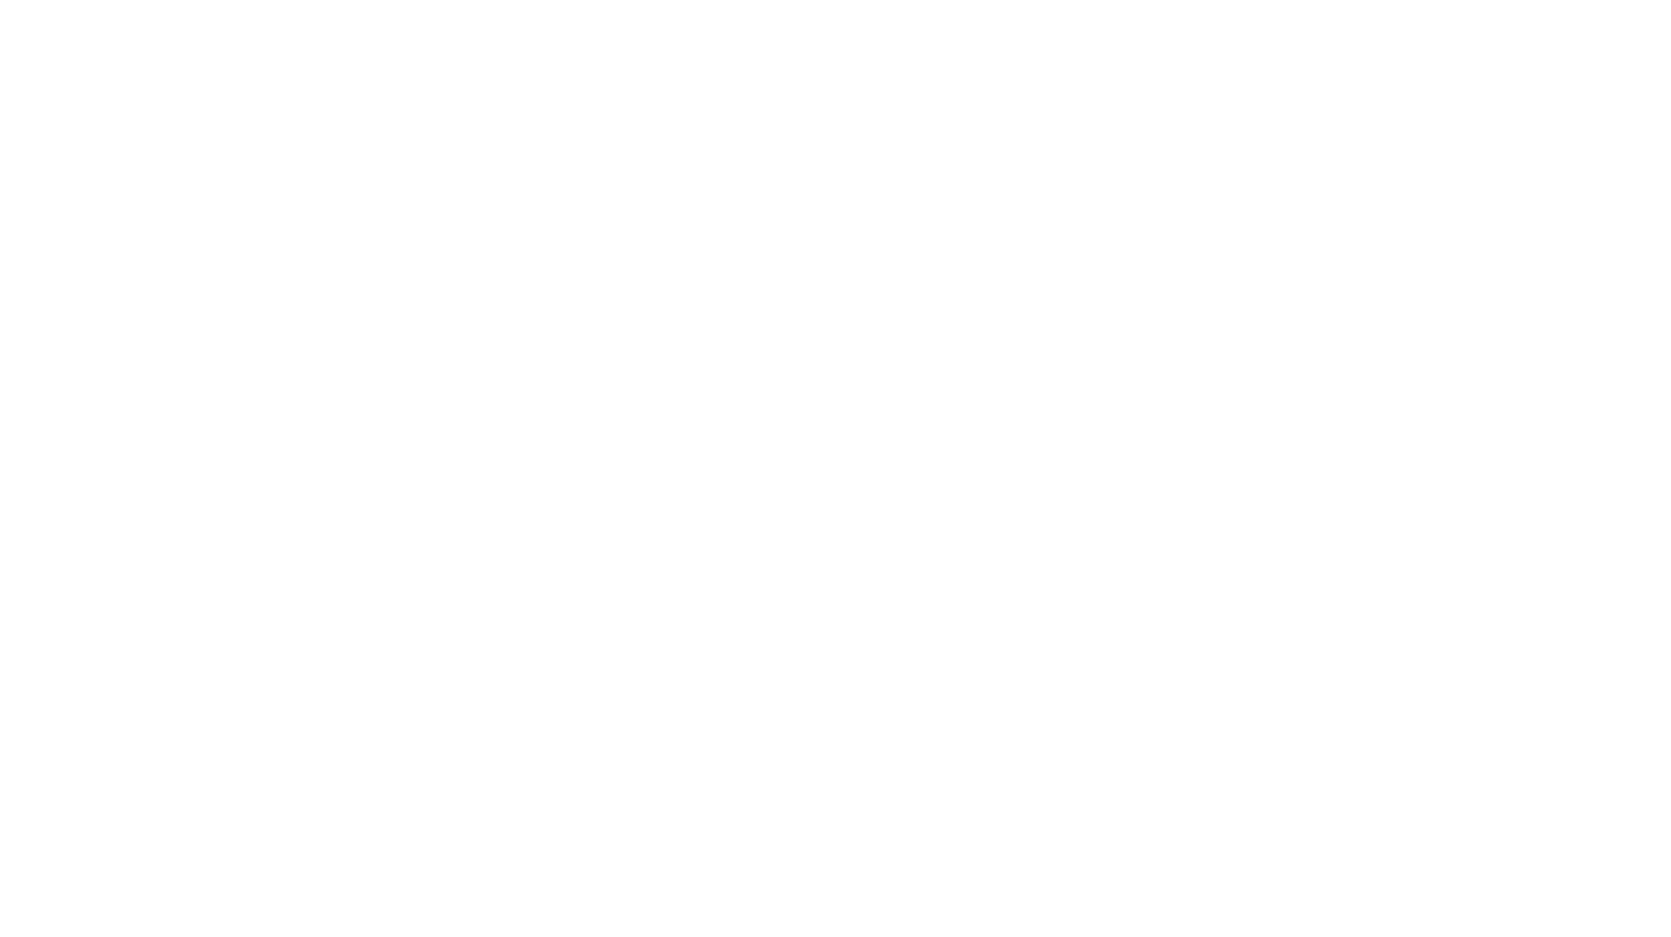 BBS Communication